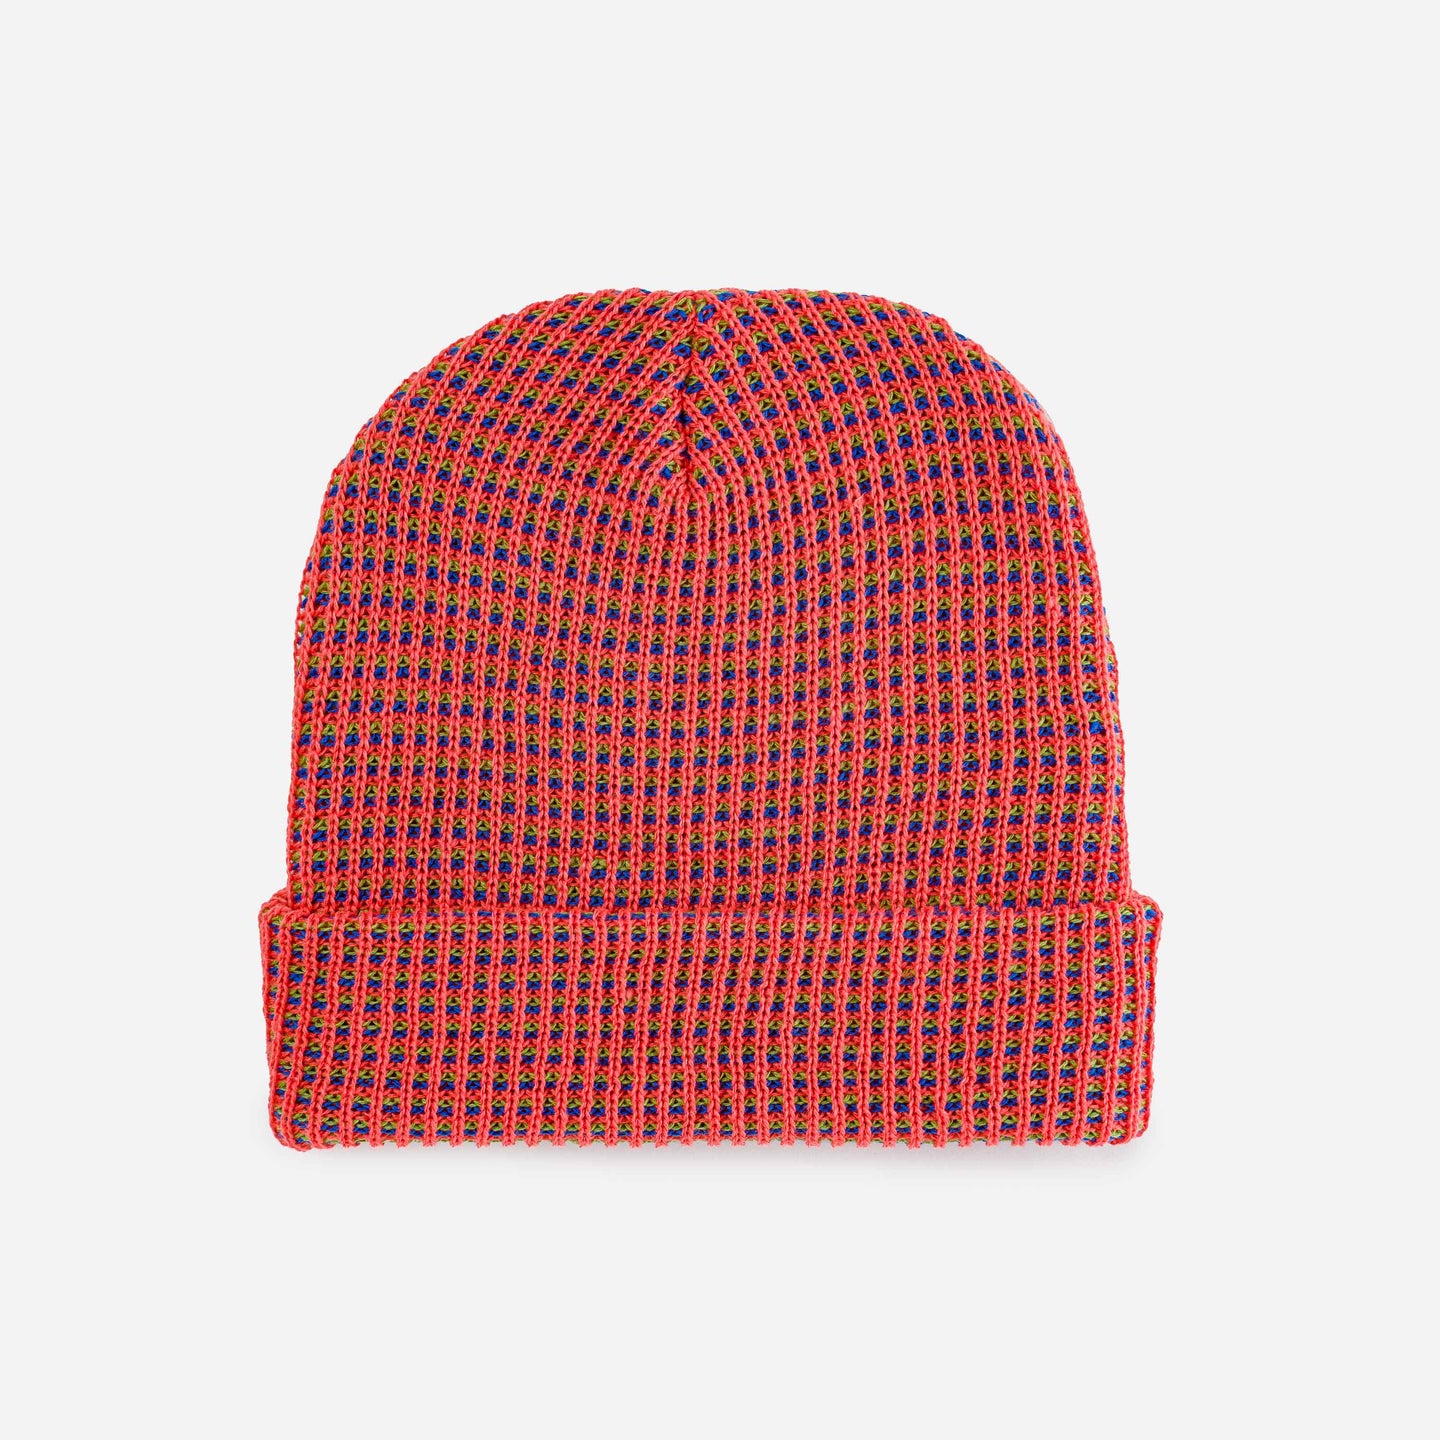 Grid Simple Rib Hat -knit slouchy